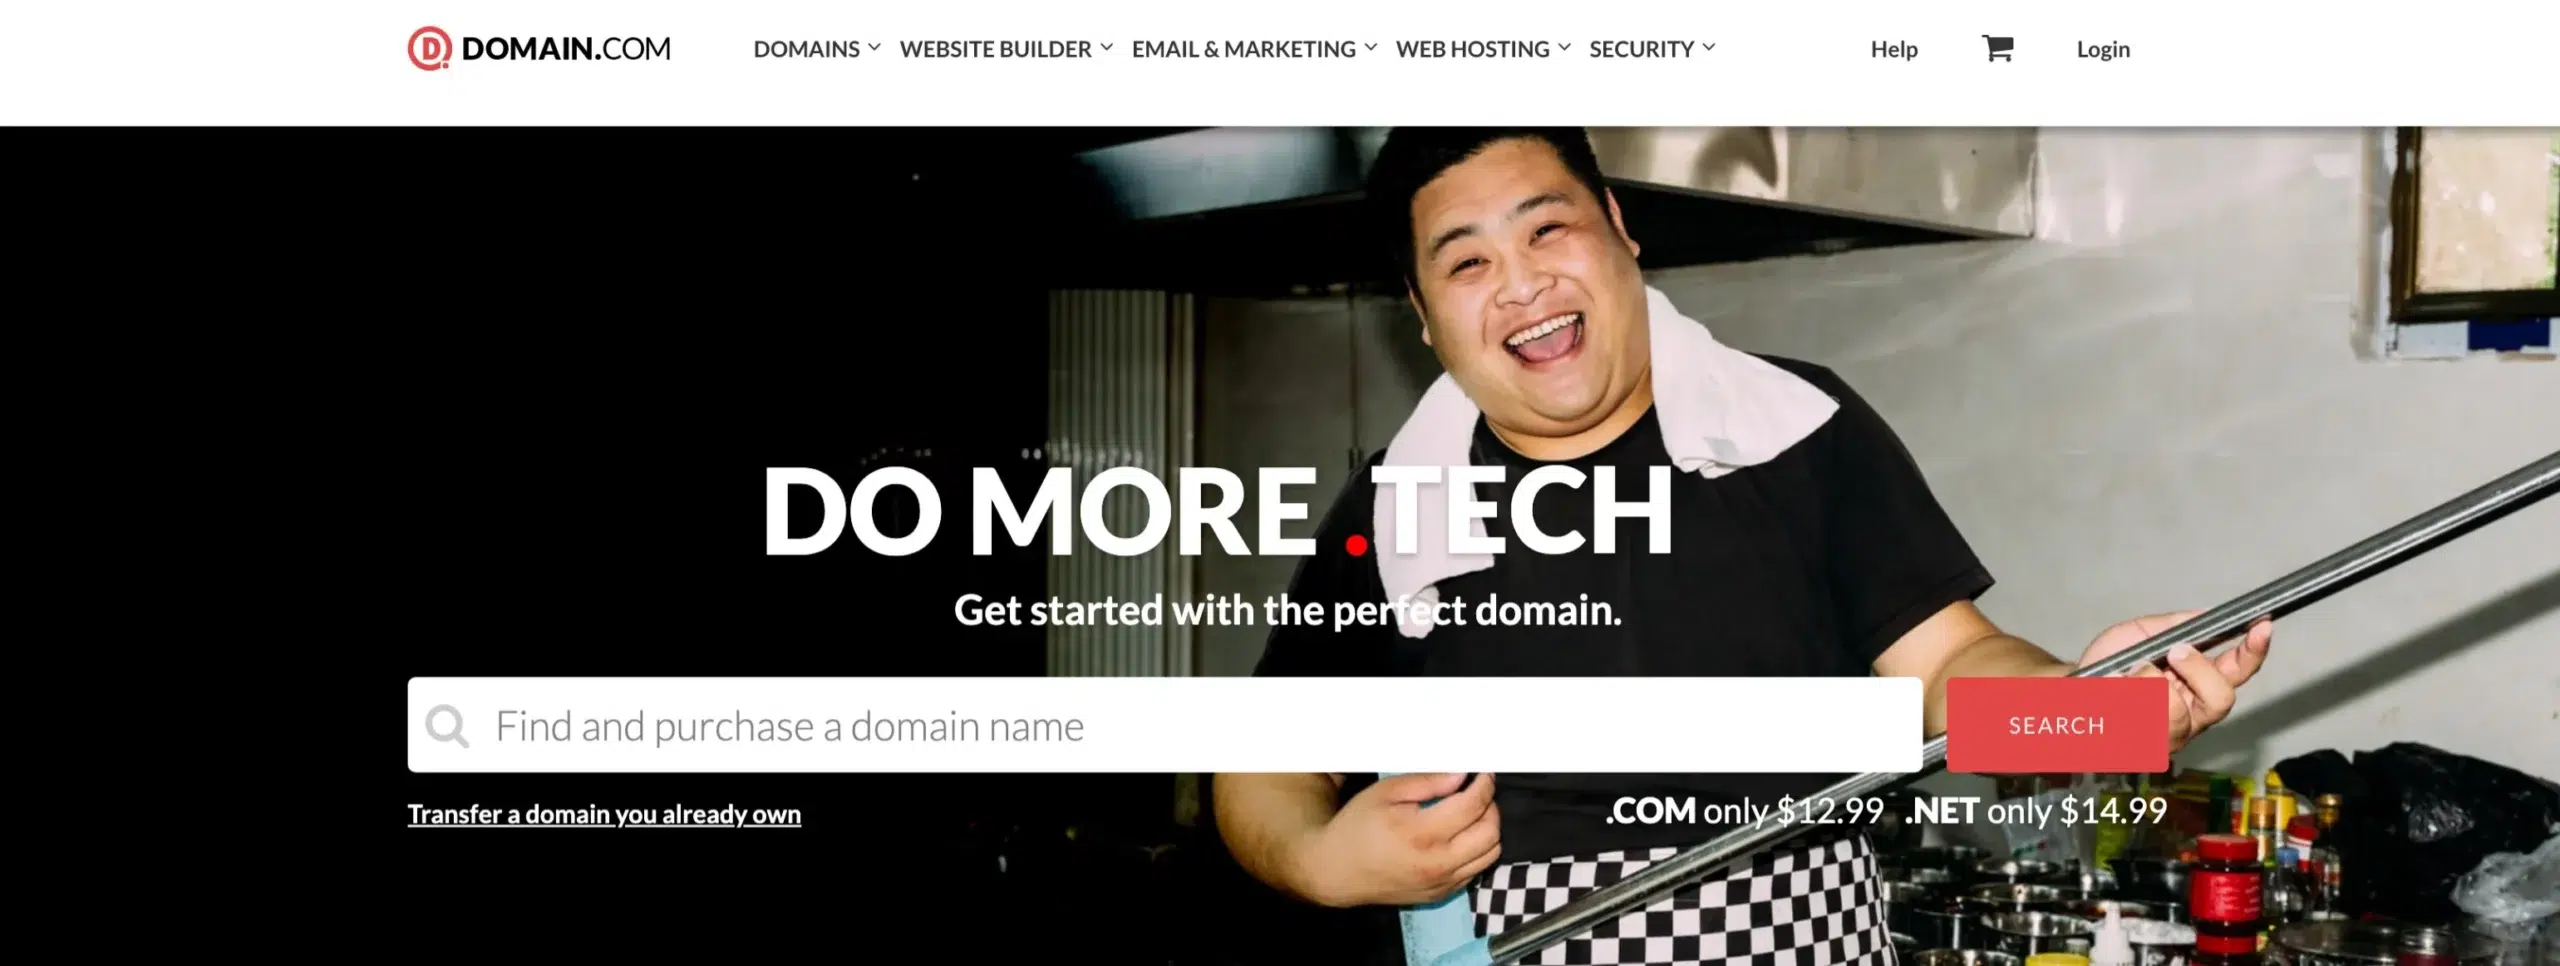 Domain.com 